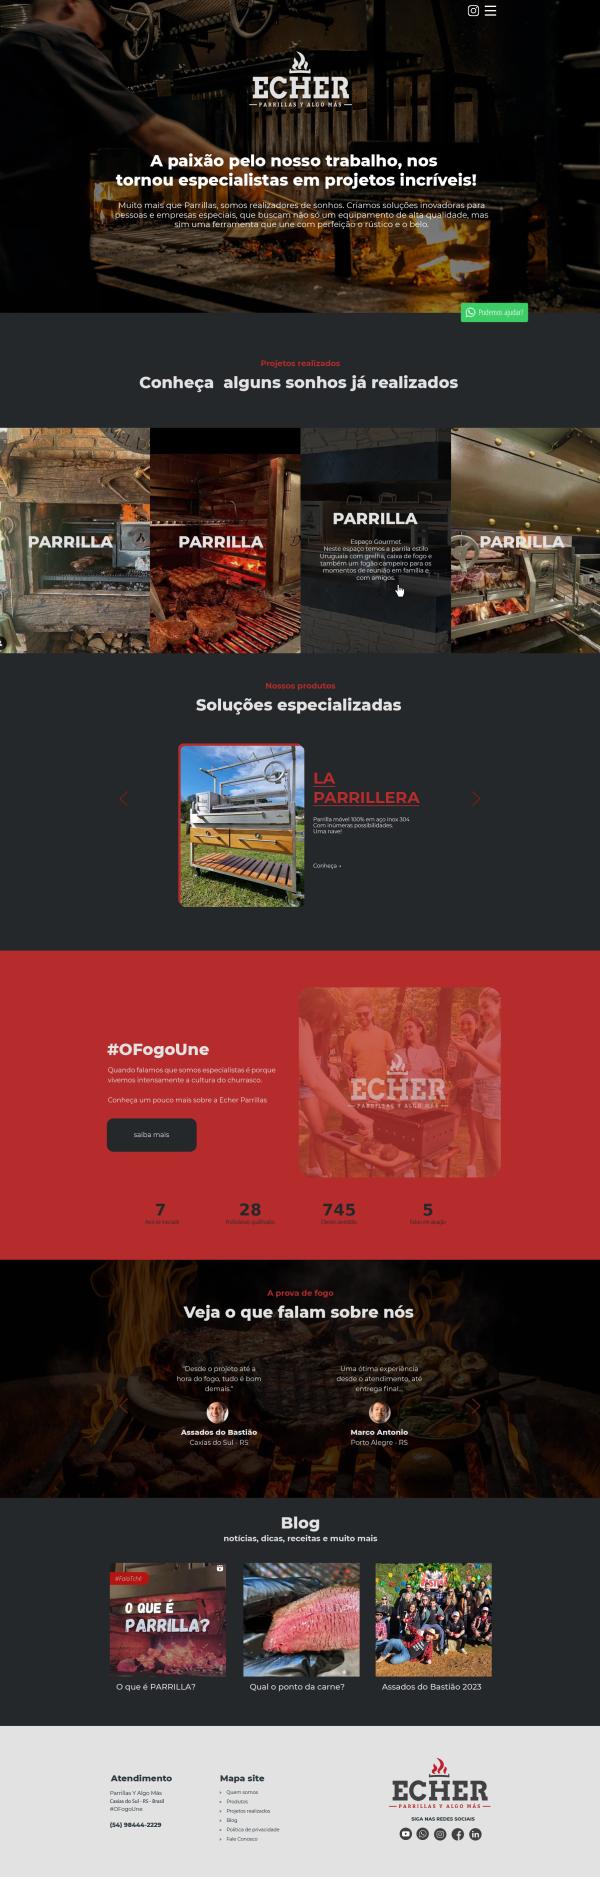 website Echer Parrillas